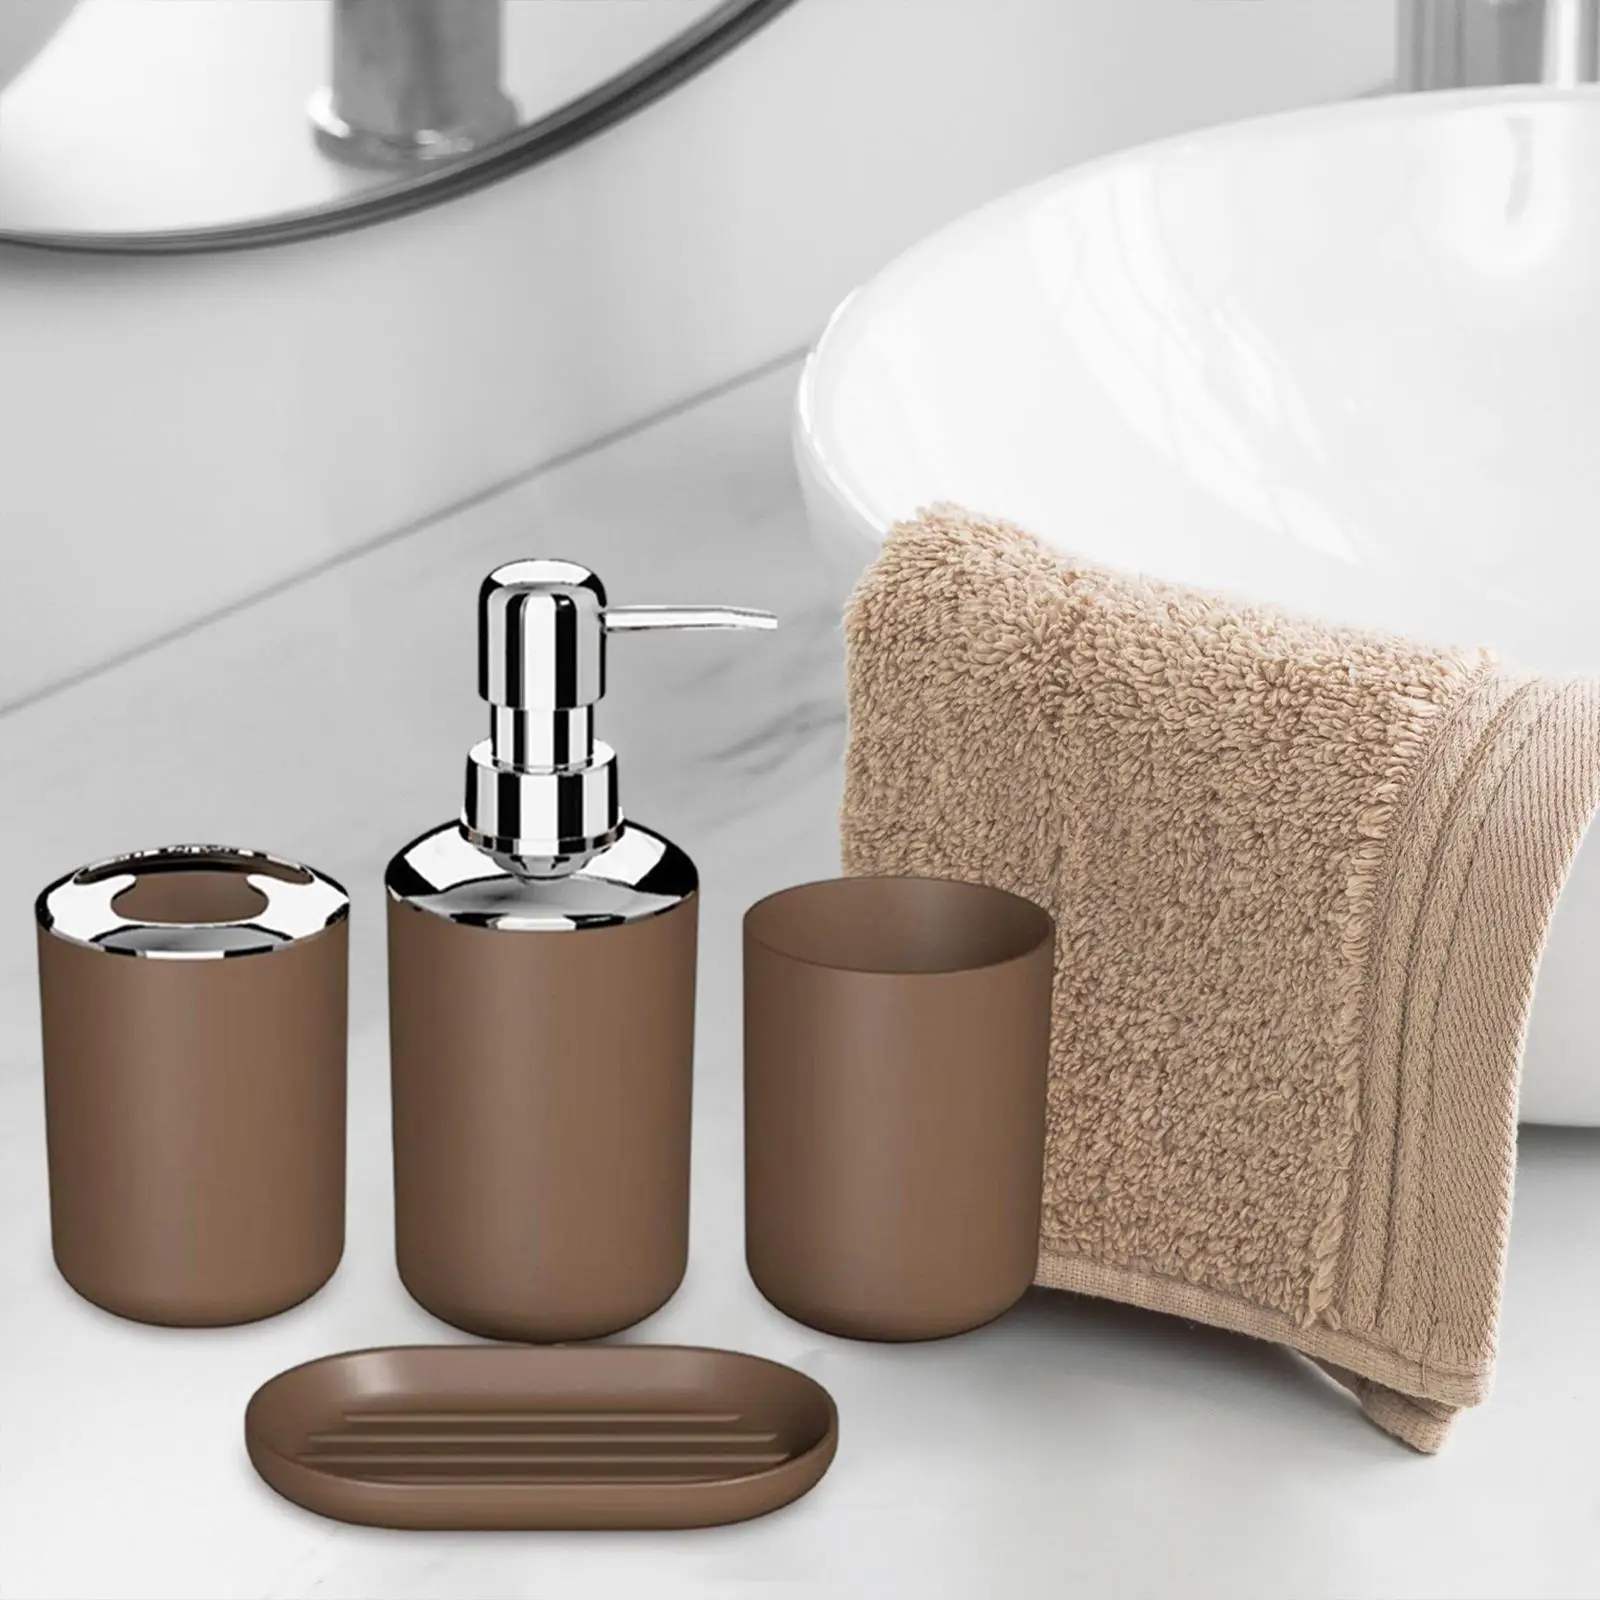 4Pcs Bathroom Accessories Set & Soap Dish Countertop Decor Neat & Tumbler Vanity Organizer for Apartment Homes Hotels